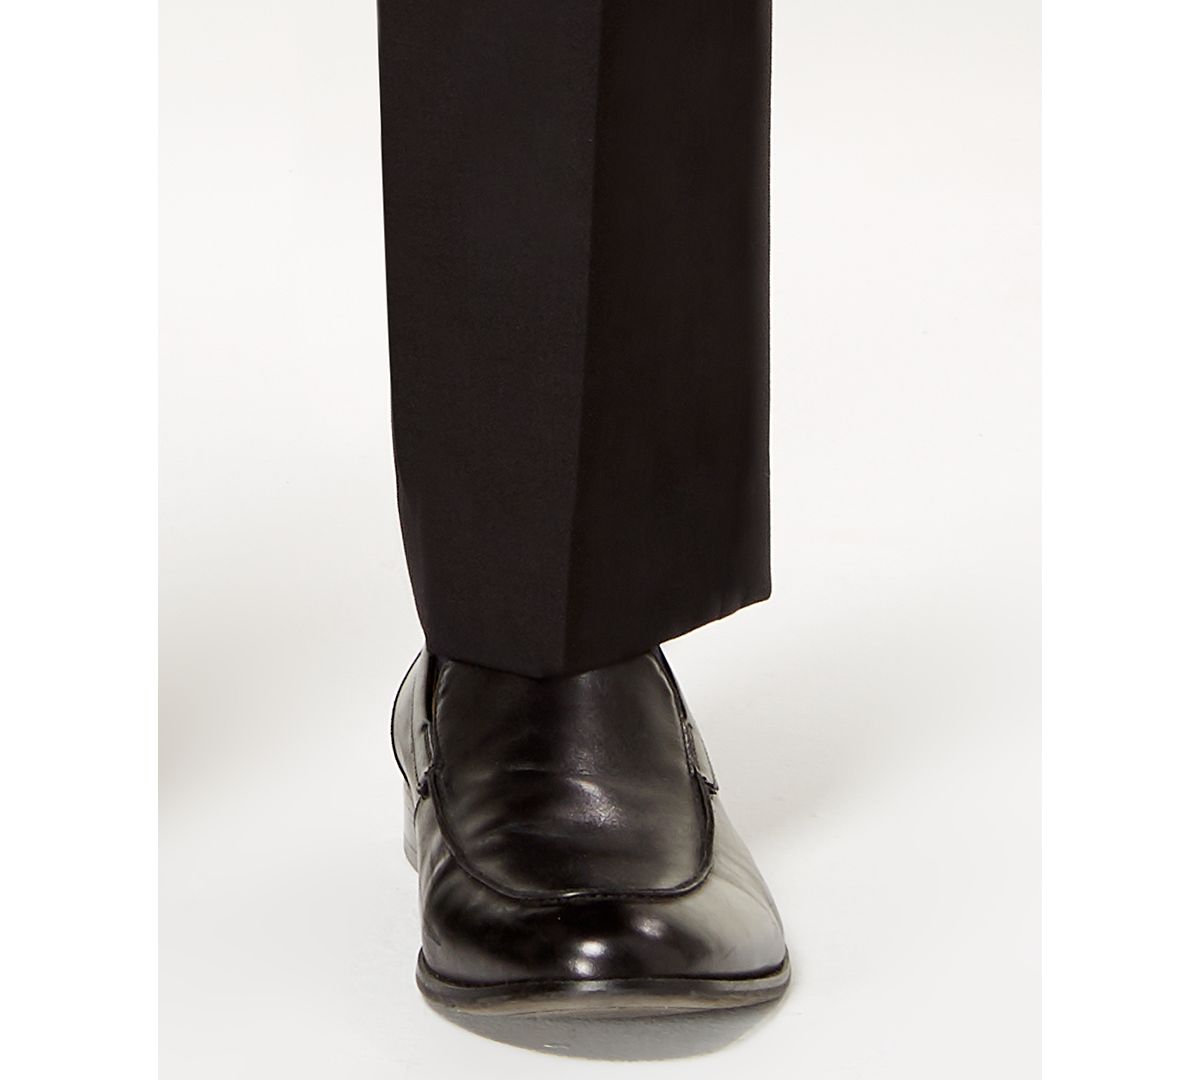 Michael Kors Classic-fit Airsoft Stretch Solid Suit Pants Black